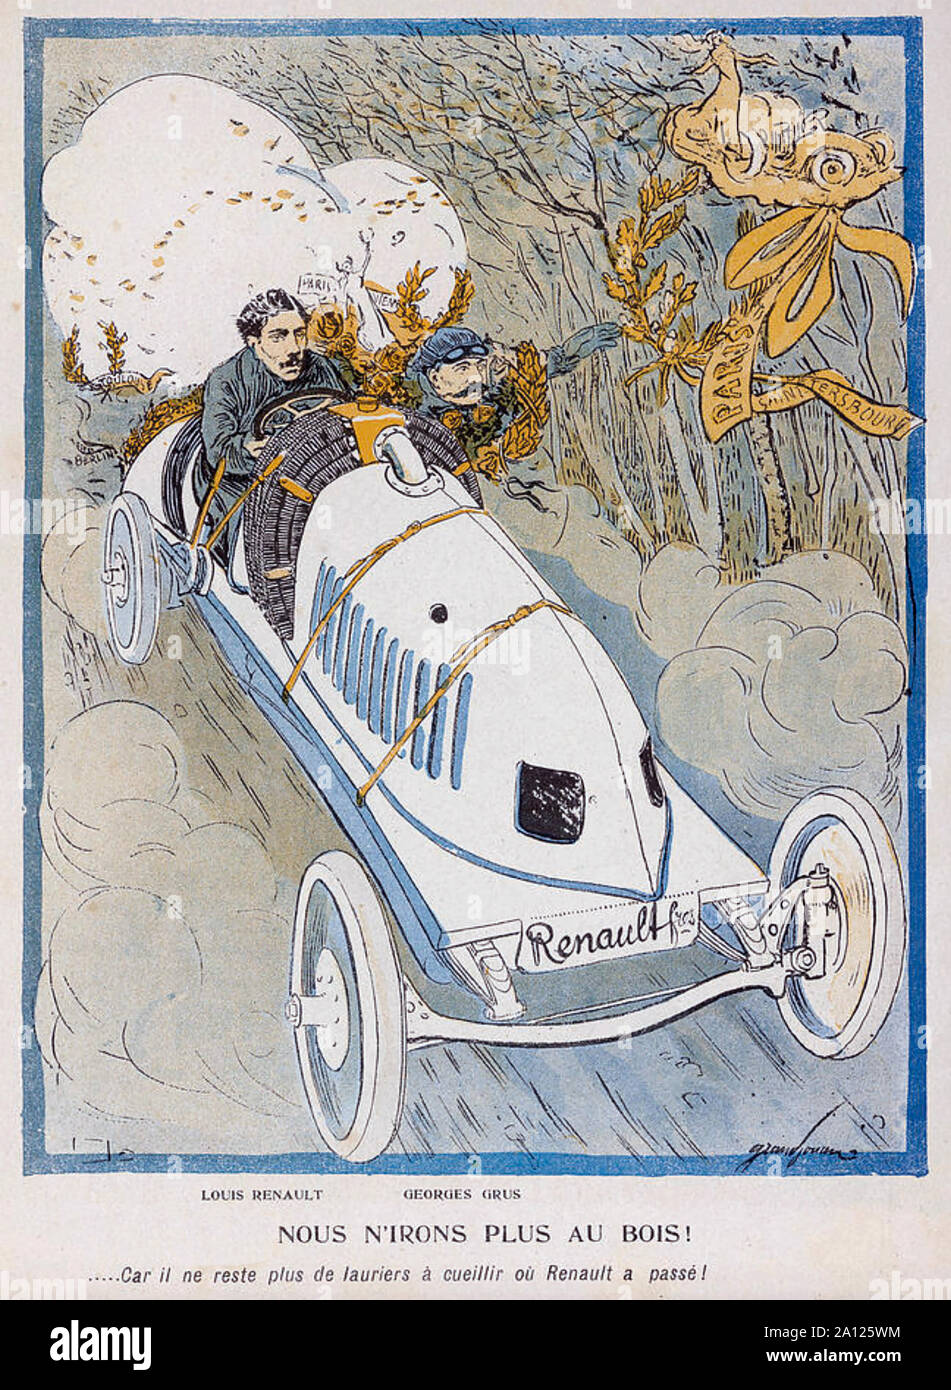 LOUIS RENAULT (1877-1944) automobile pioneer con il suo co-pilota Georges Grus in Parigi a Vienna gara del 1904 Foto Stock